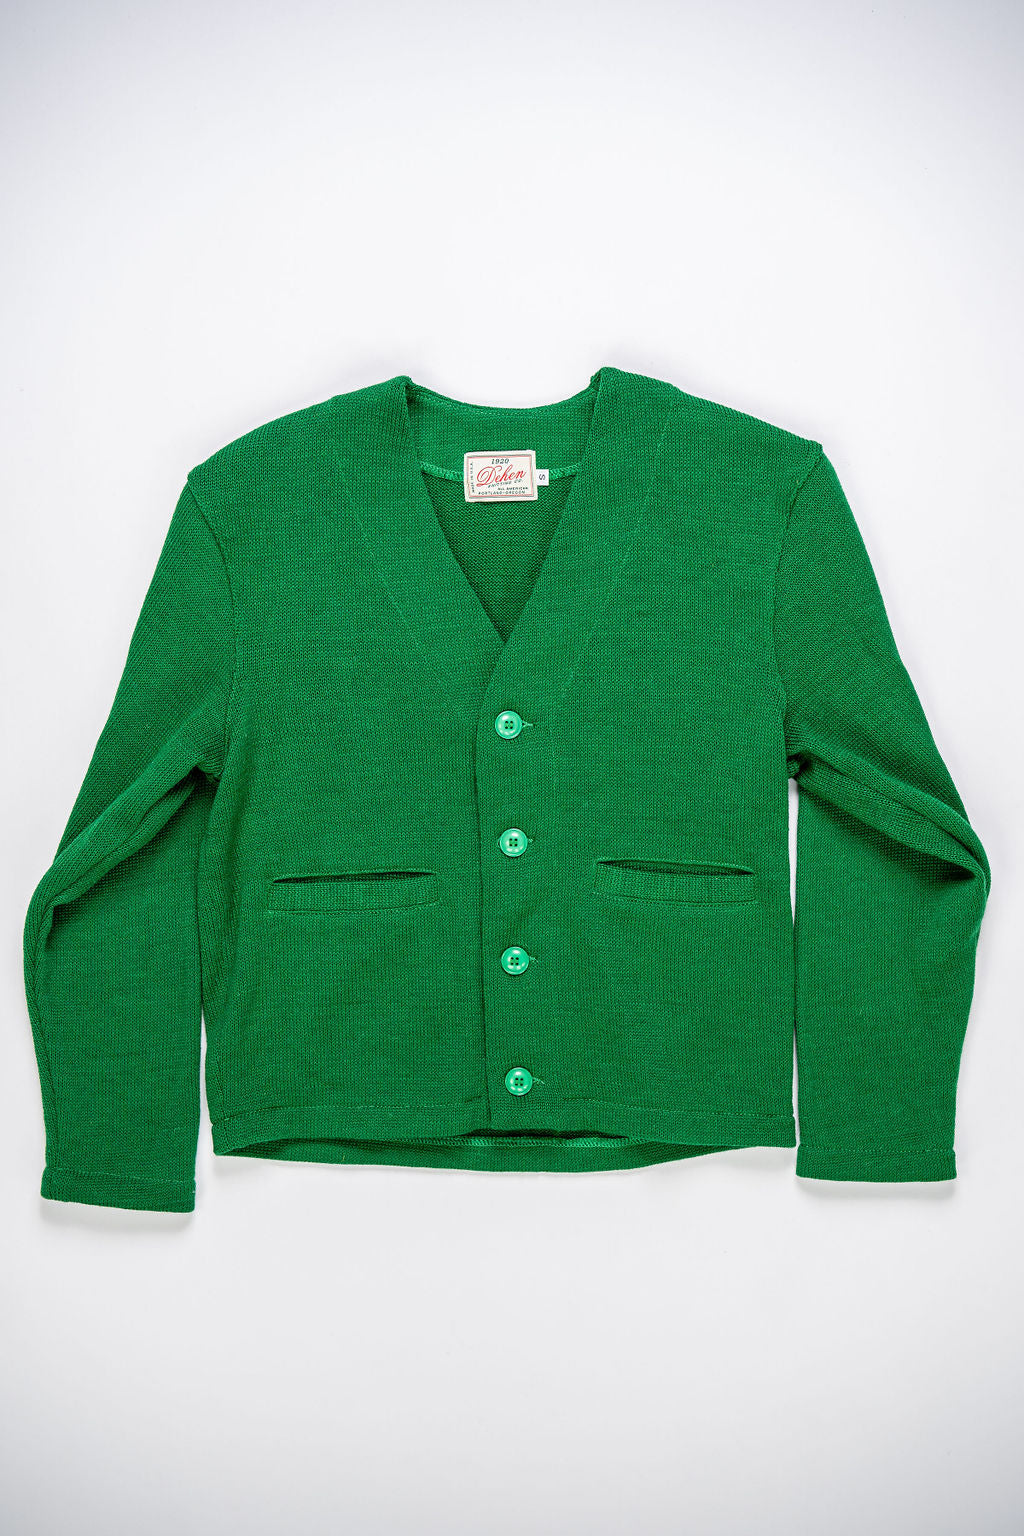 Dehen 1920 Slouchy Cardigan Sweater - Kelly Green